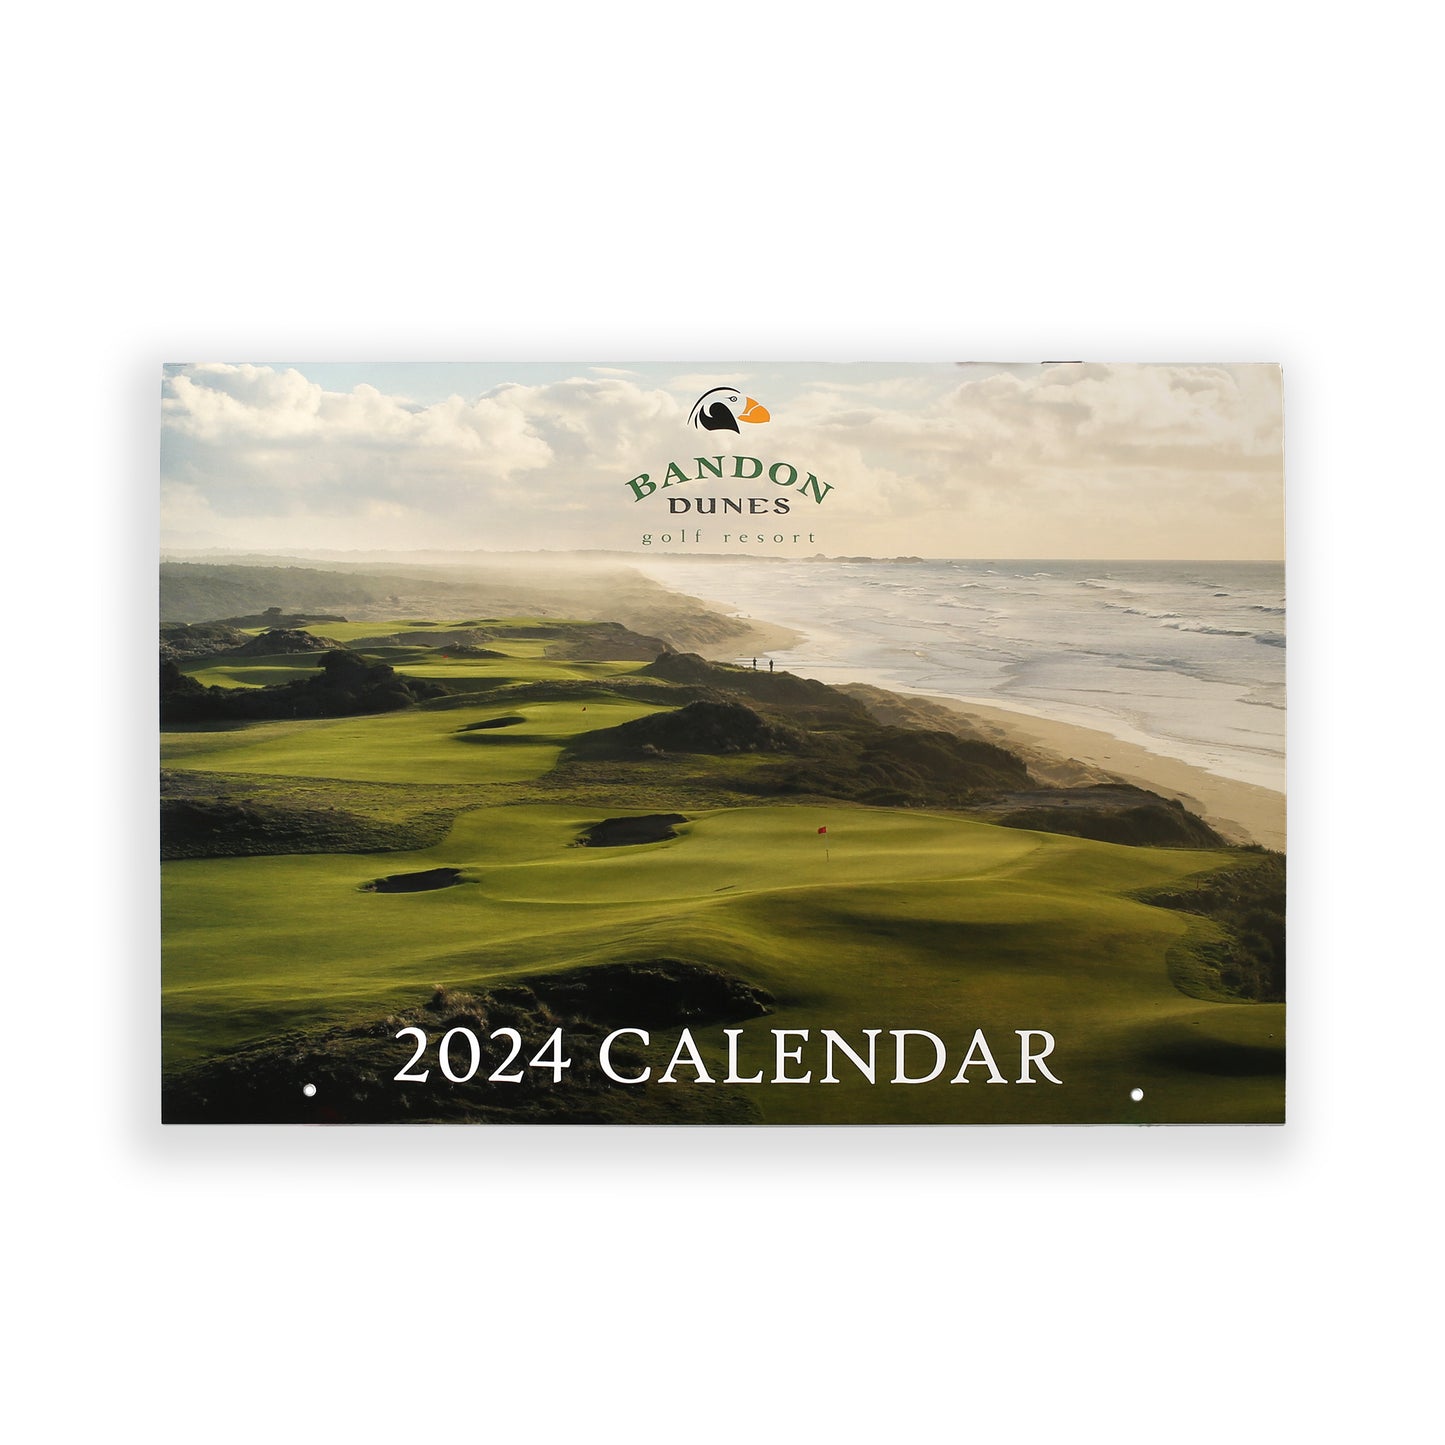 Bandon Dunes 2024 Calendar.